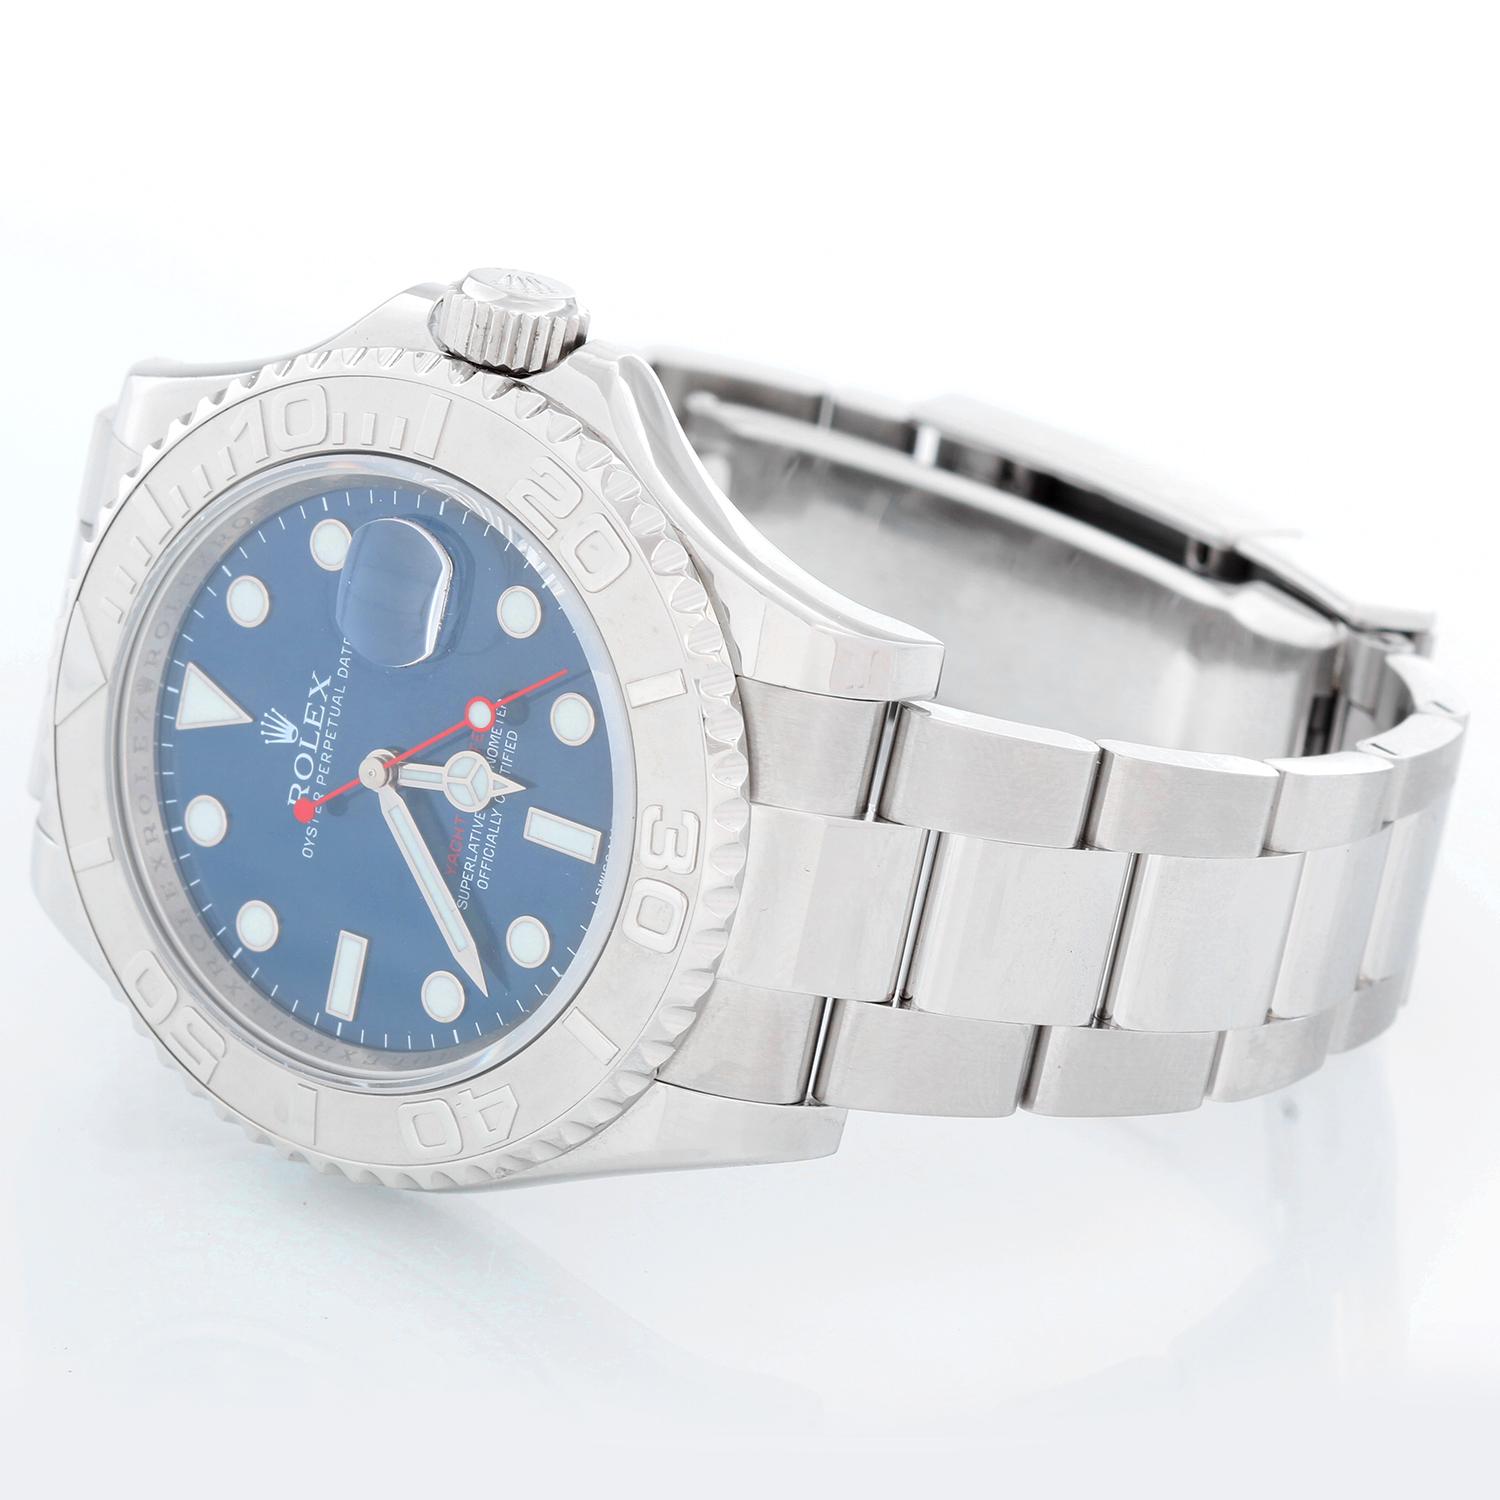 Rolex Stainless Steel Yacht-Master Automatic Wristwatch Ref 116622 3